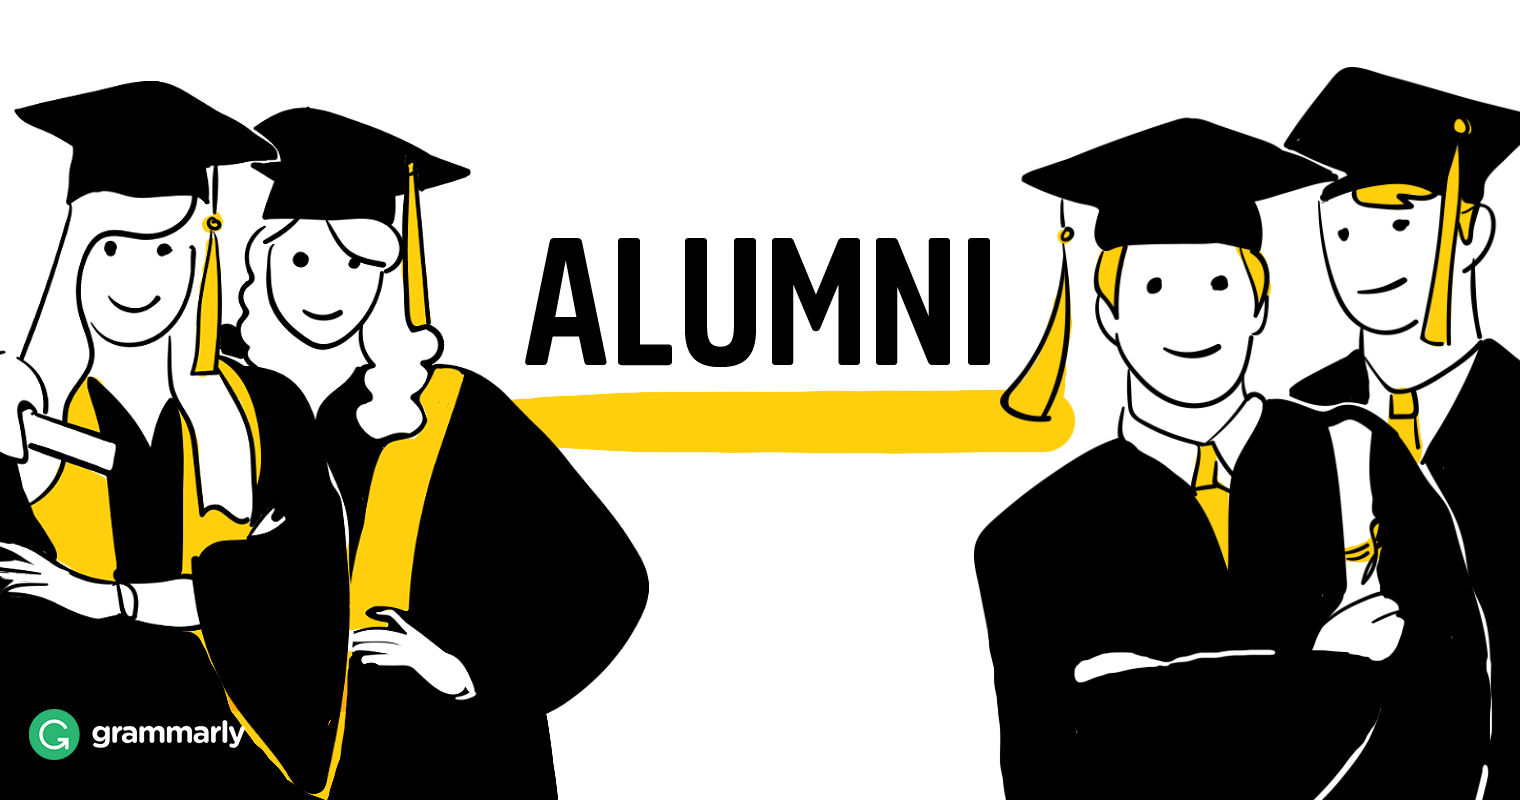 Your alumni. Image: Grammarly